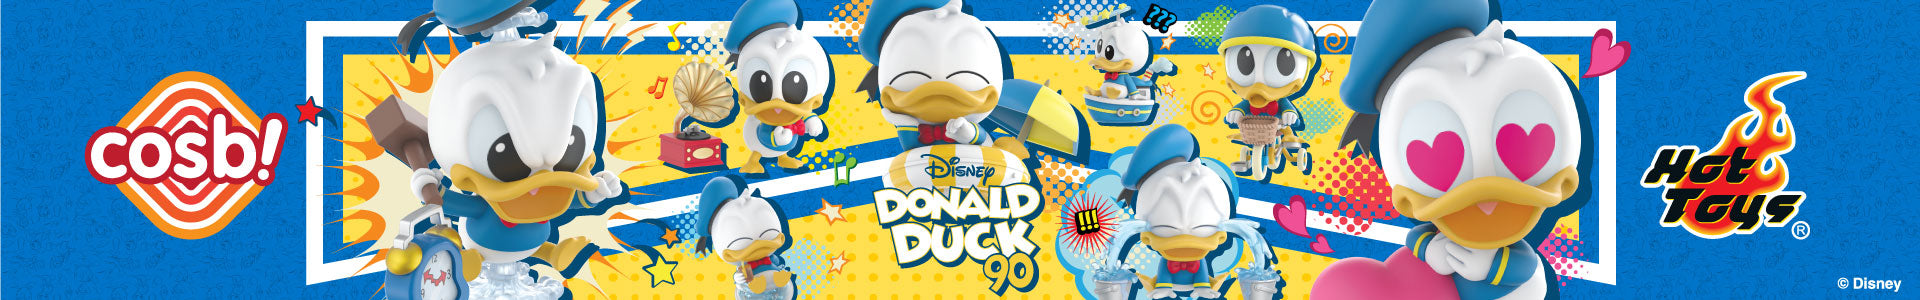 Donald Duck 90th Anniversary